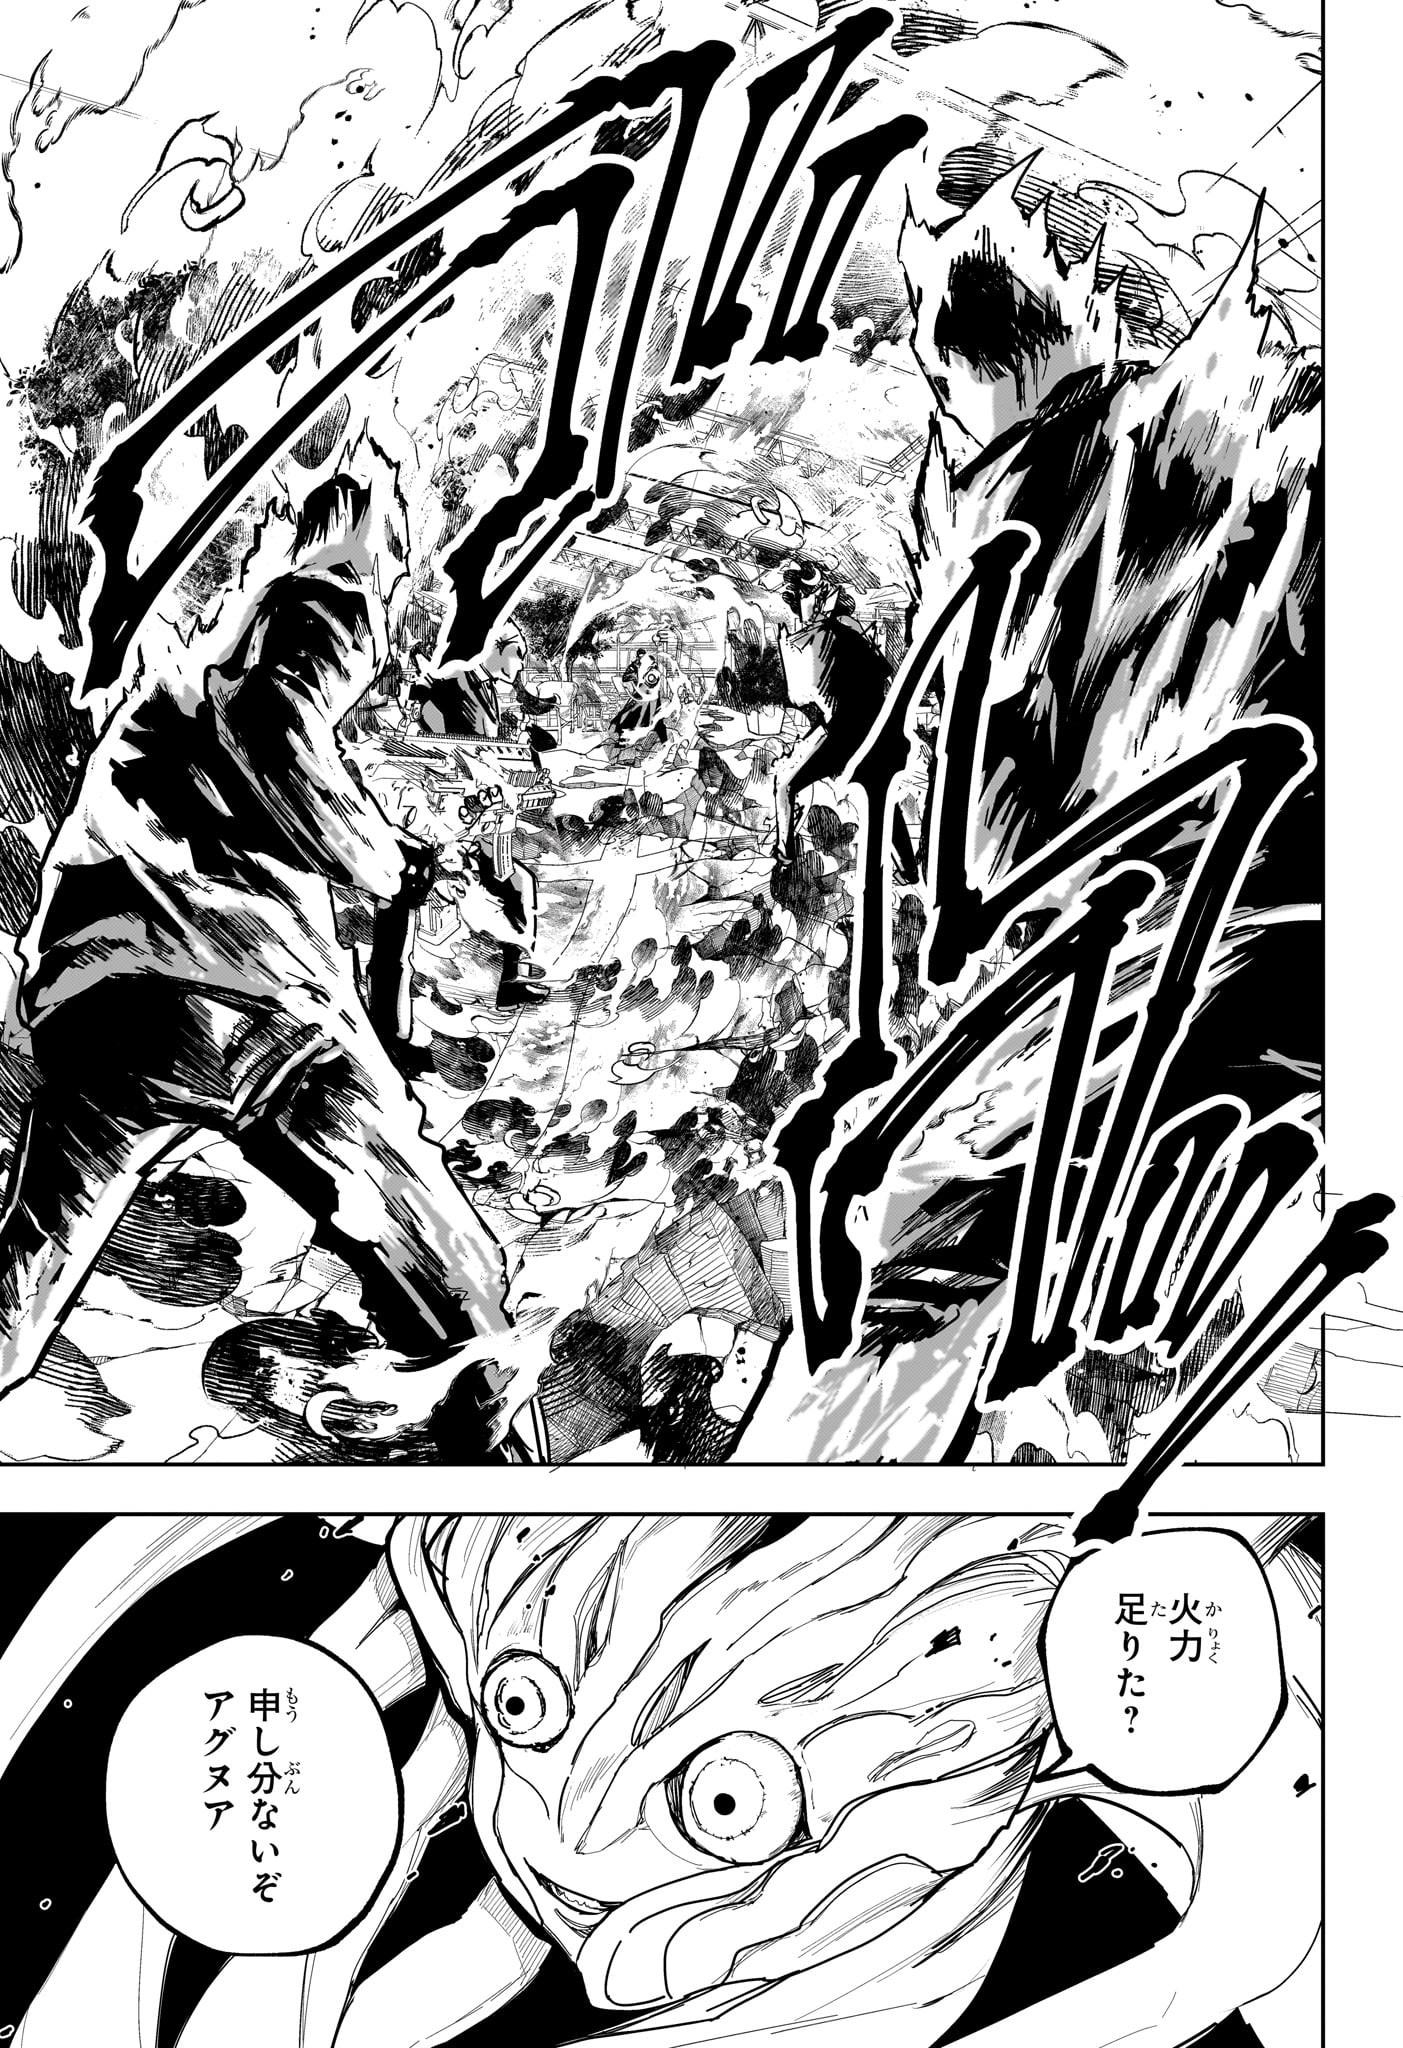 Kyokuto Necromance - Chapter 12 - Page 15